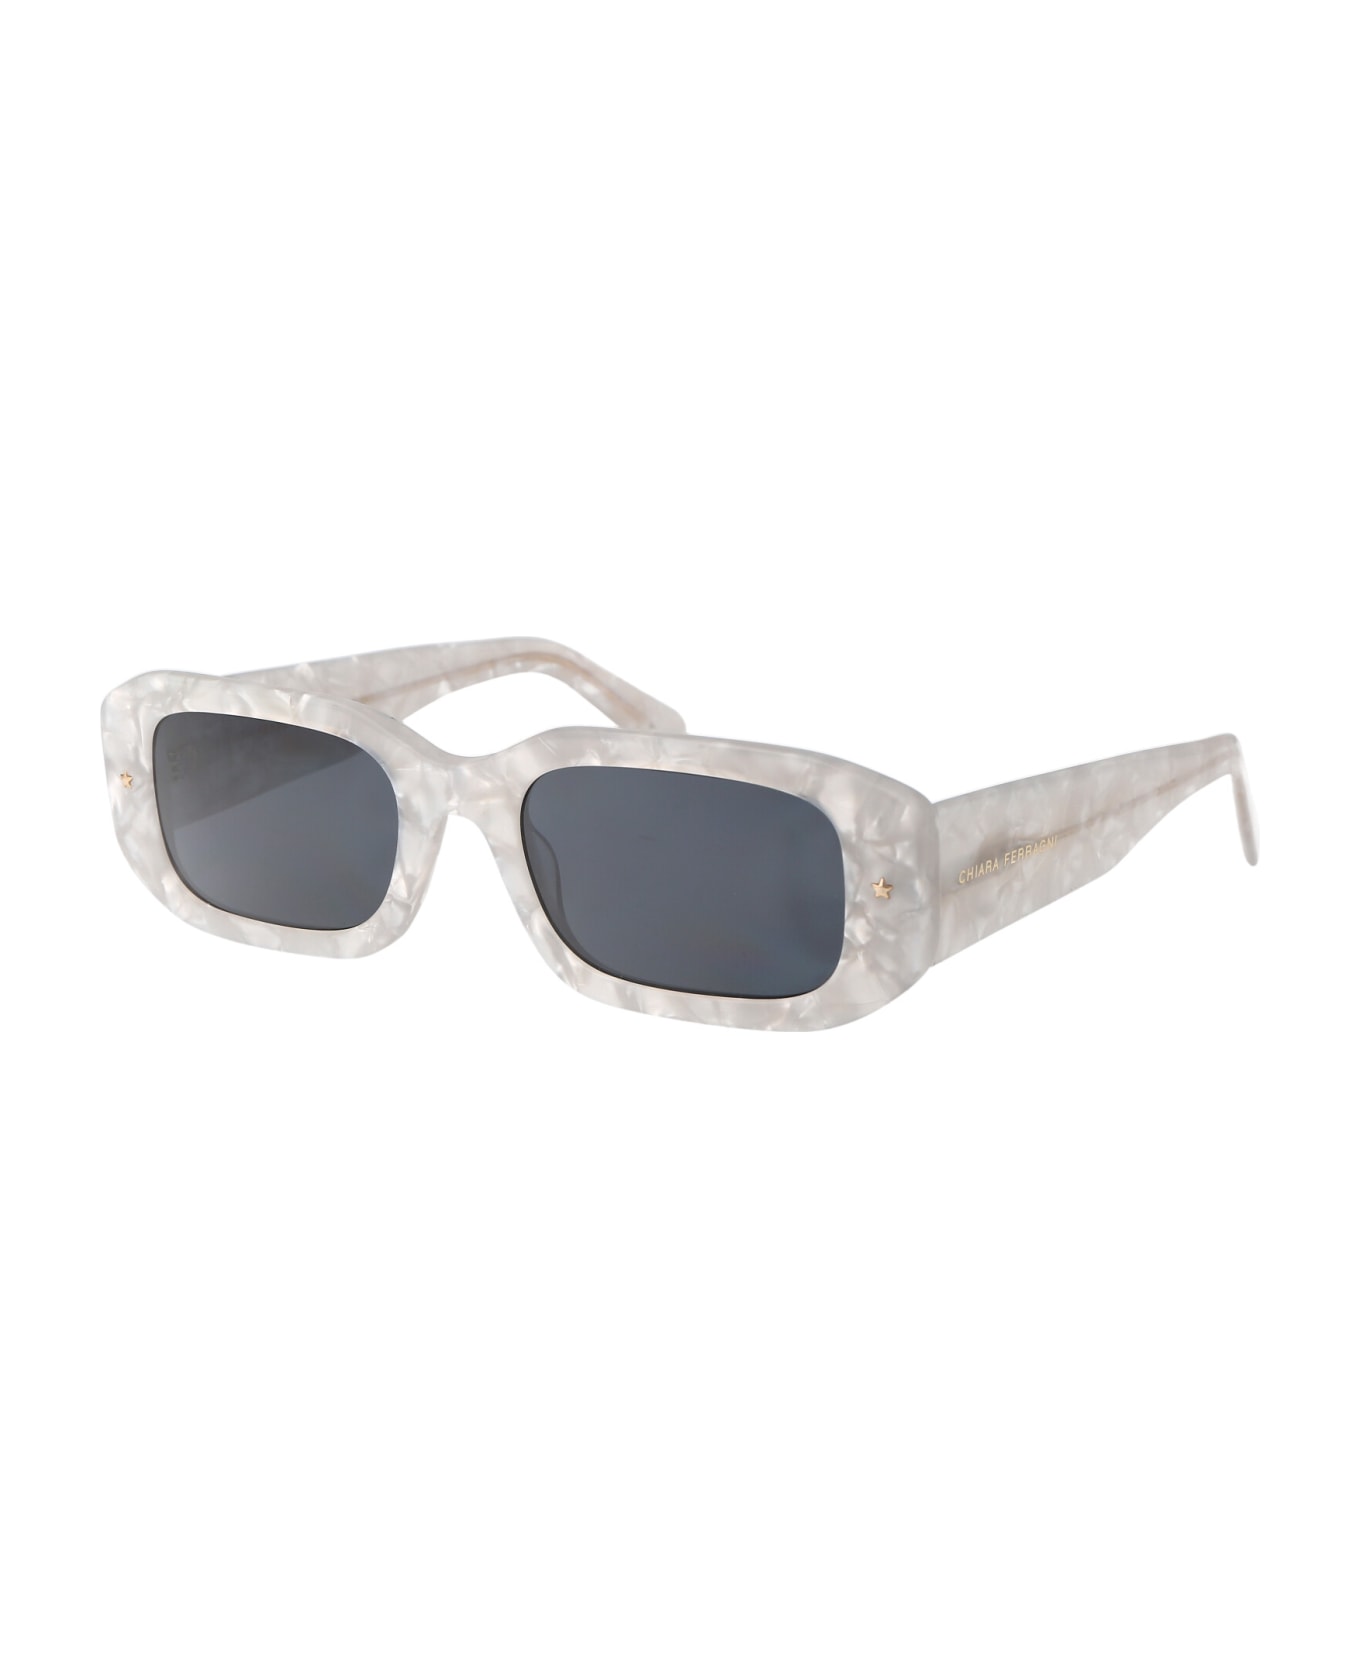 Chiara Ferragni Cf 7031/s Sunglasses - 7APIR PEARLED WHITE サングラス